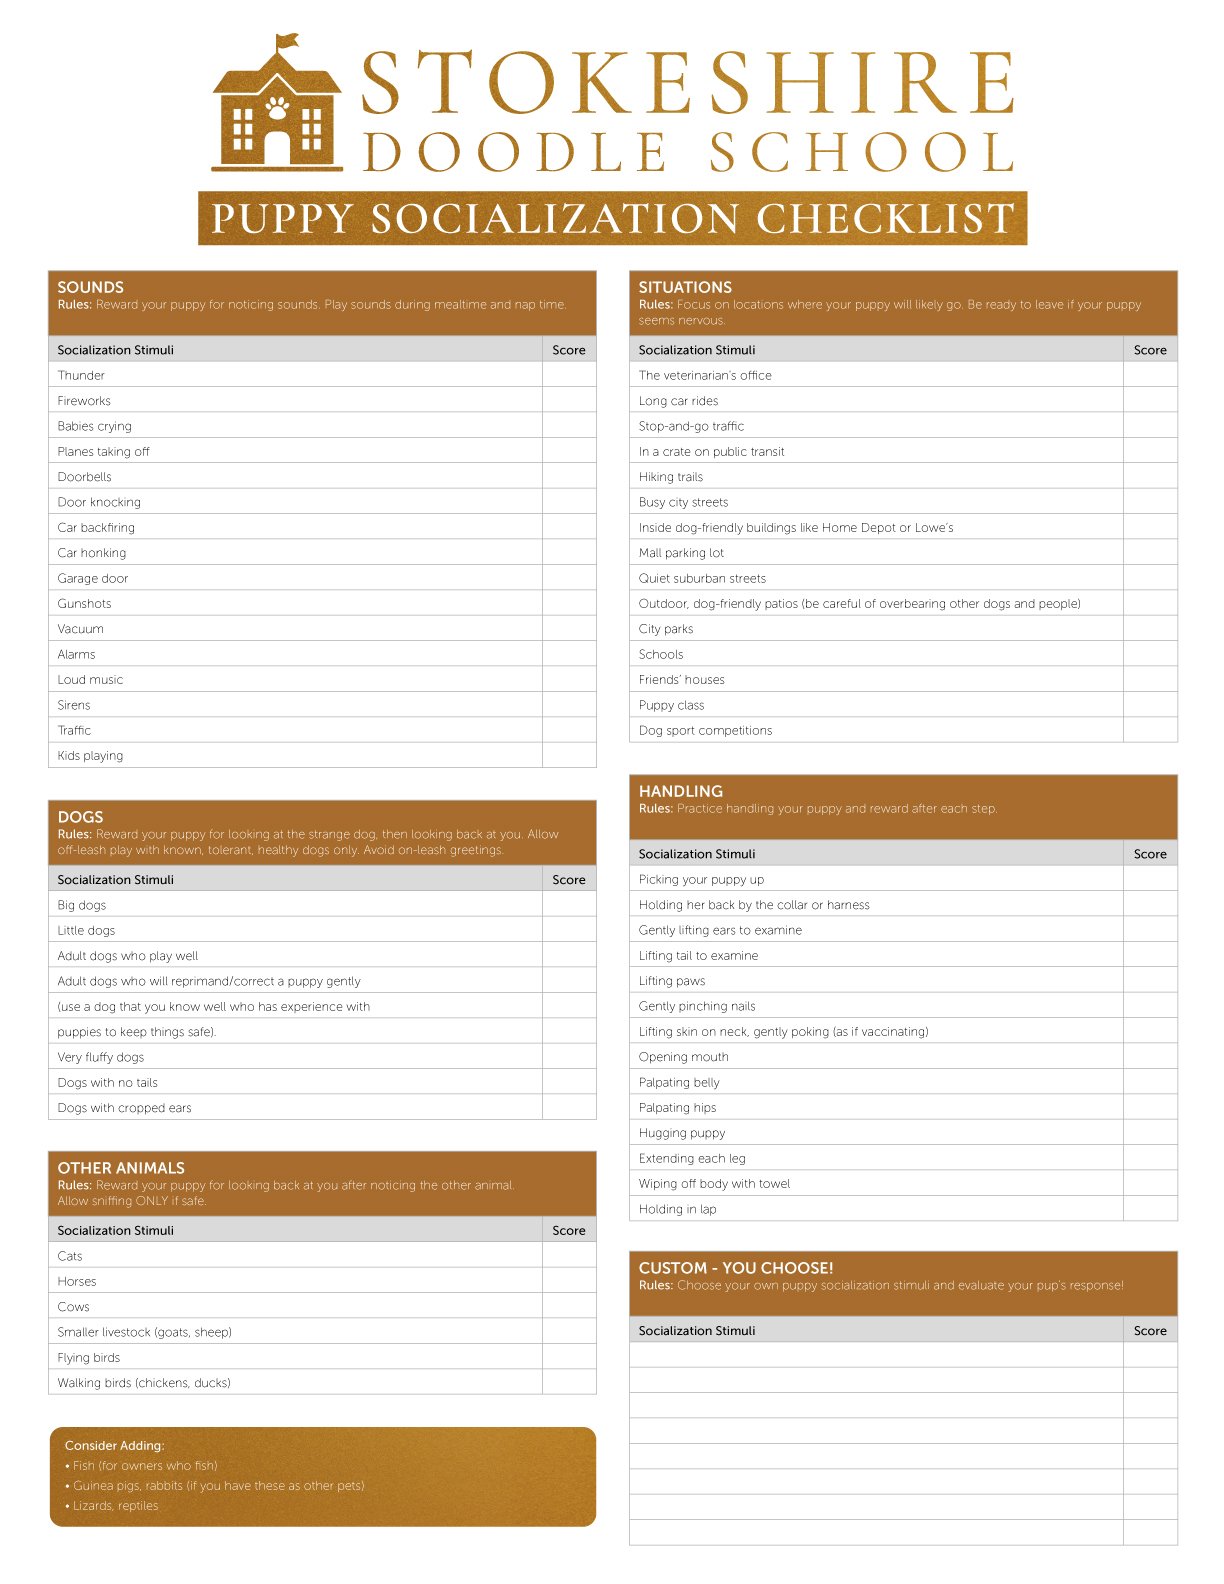 Stokeshire-Doodle-School-Puppy-Socialization-Checklist-8.5x11-PAGE-2.jpg